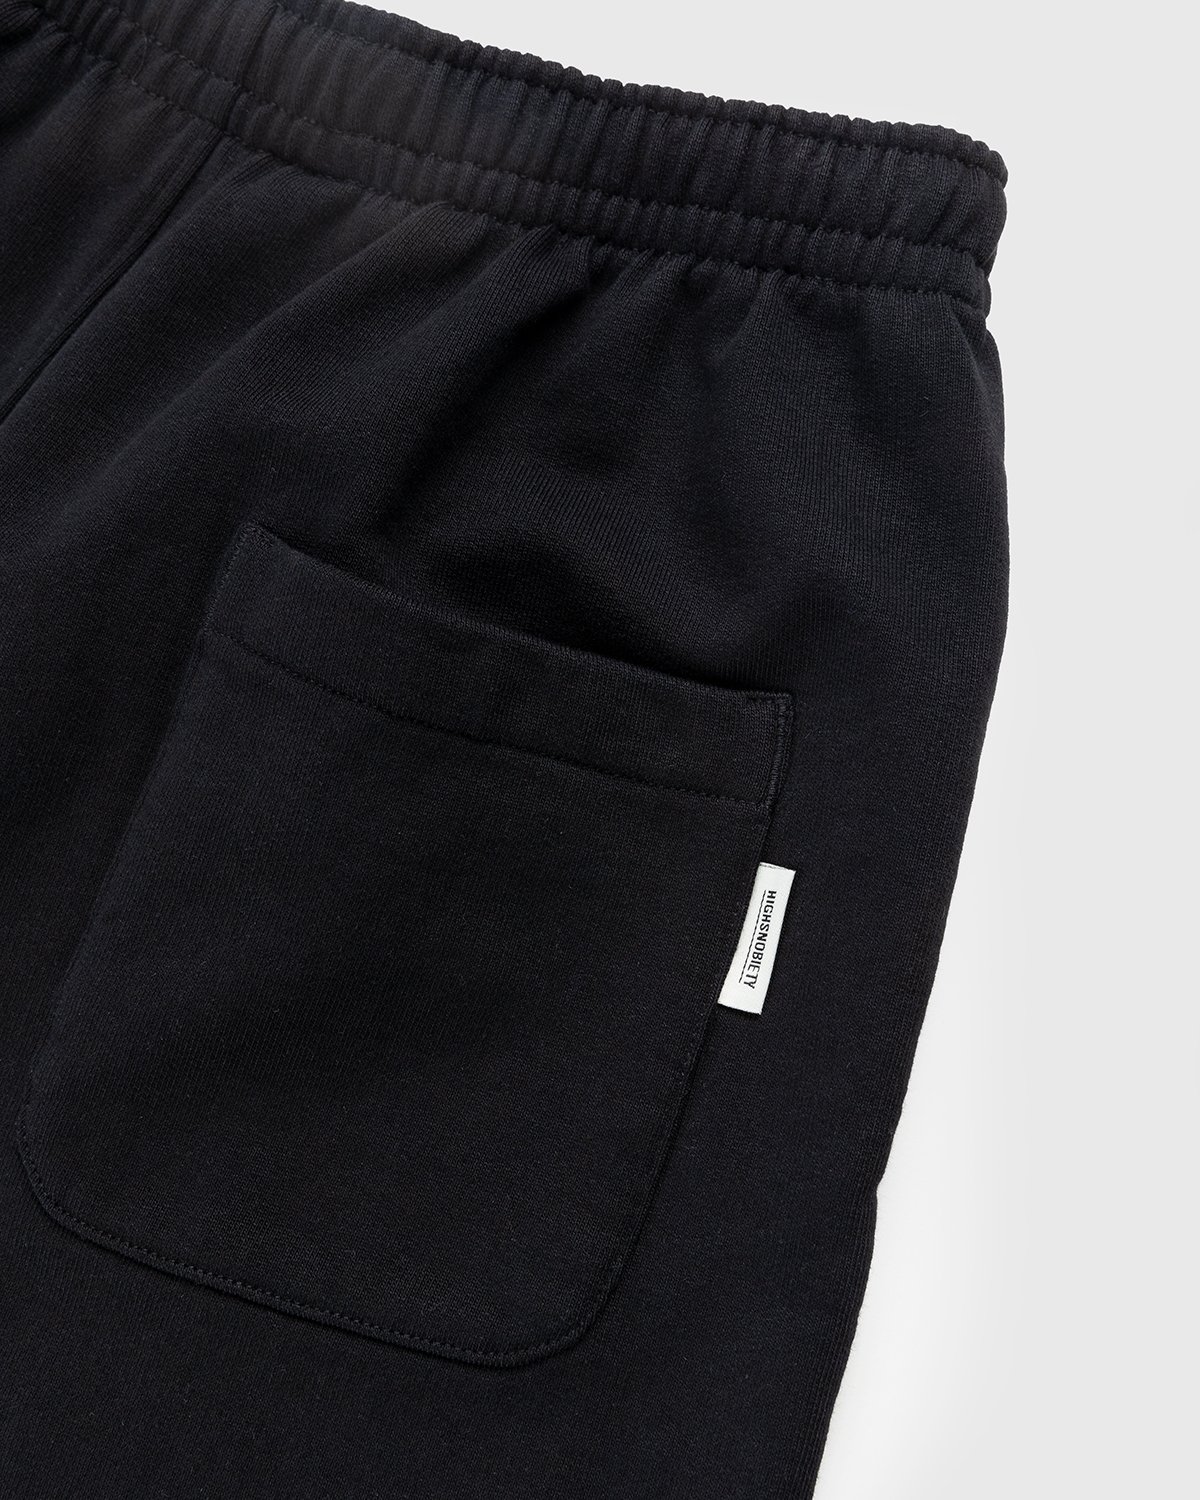 Highsnobiety - Staples Shorts Black - Clothing - Black - Image 3